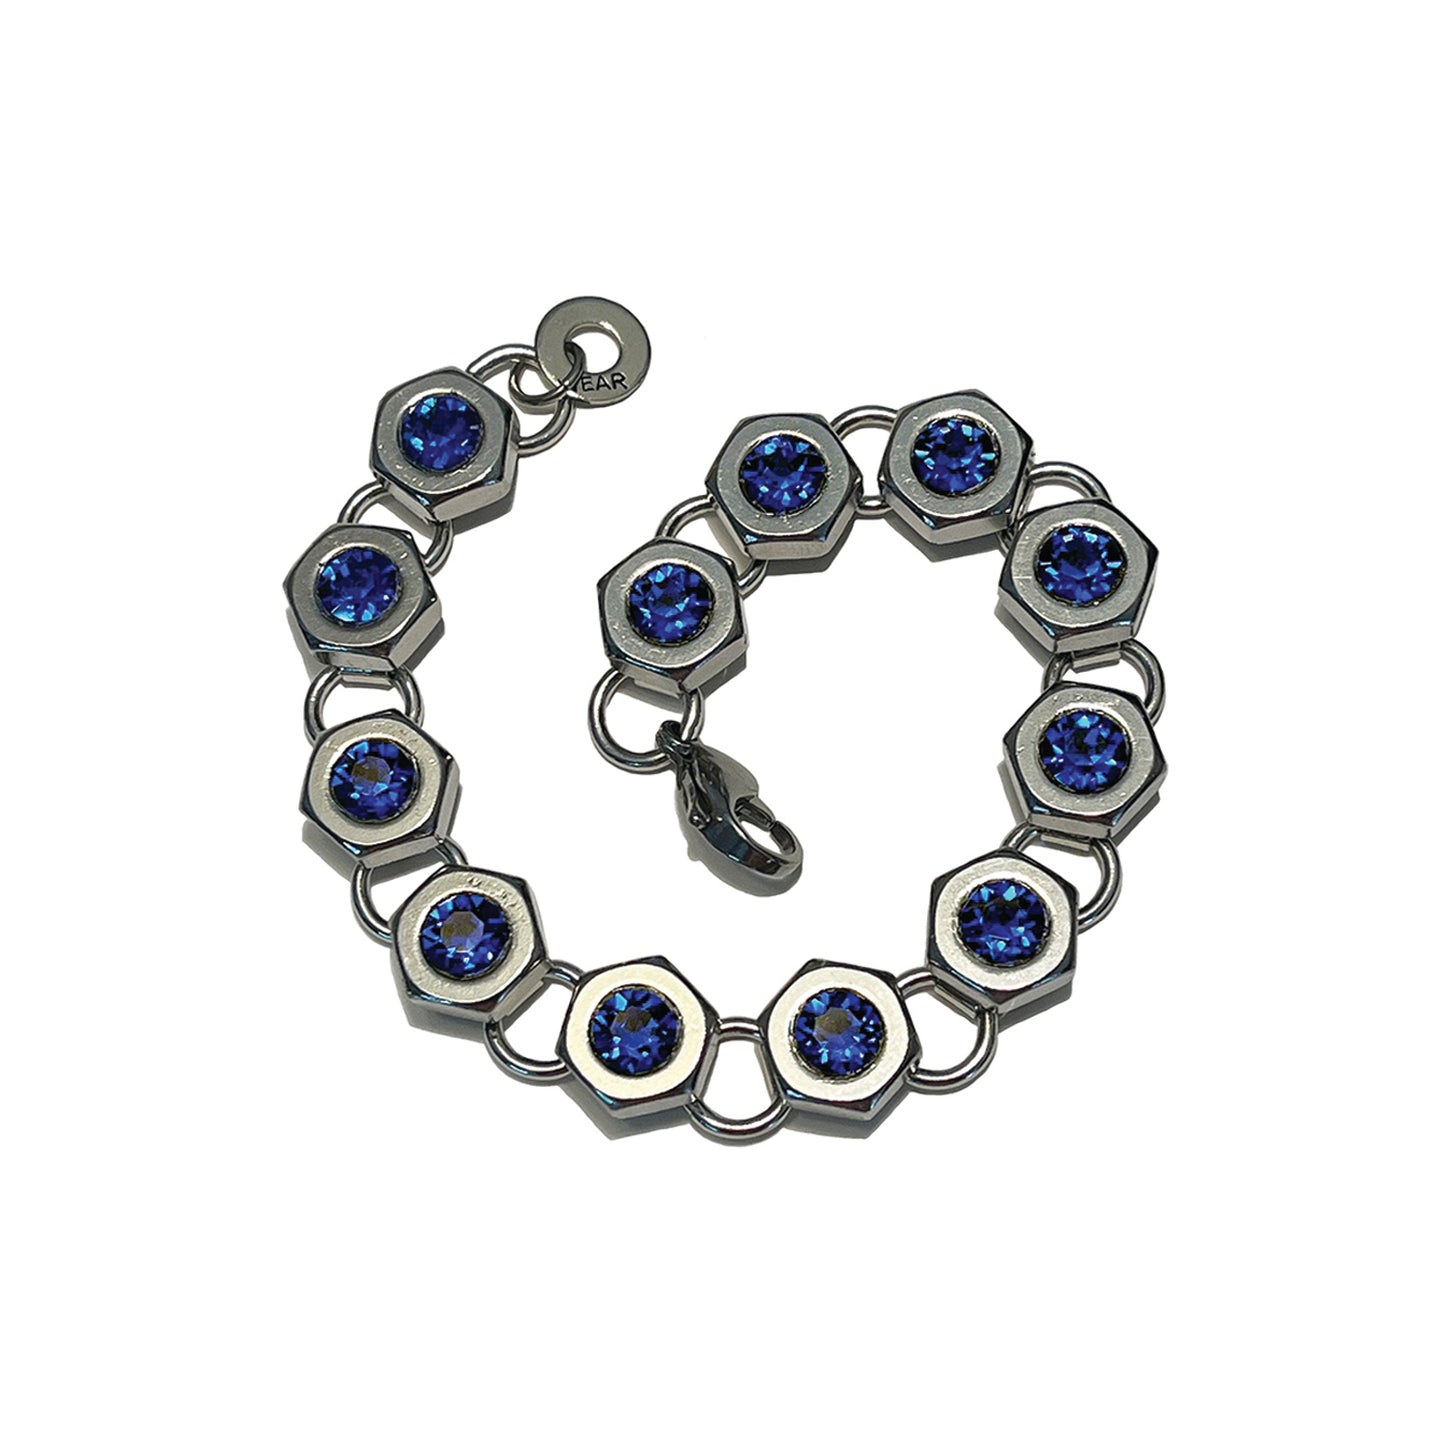 industrial tennis bracelet - Swarovski blue